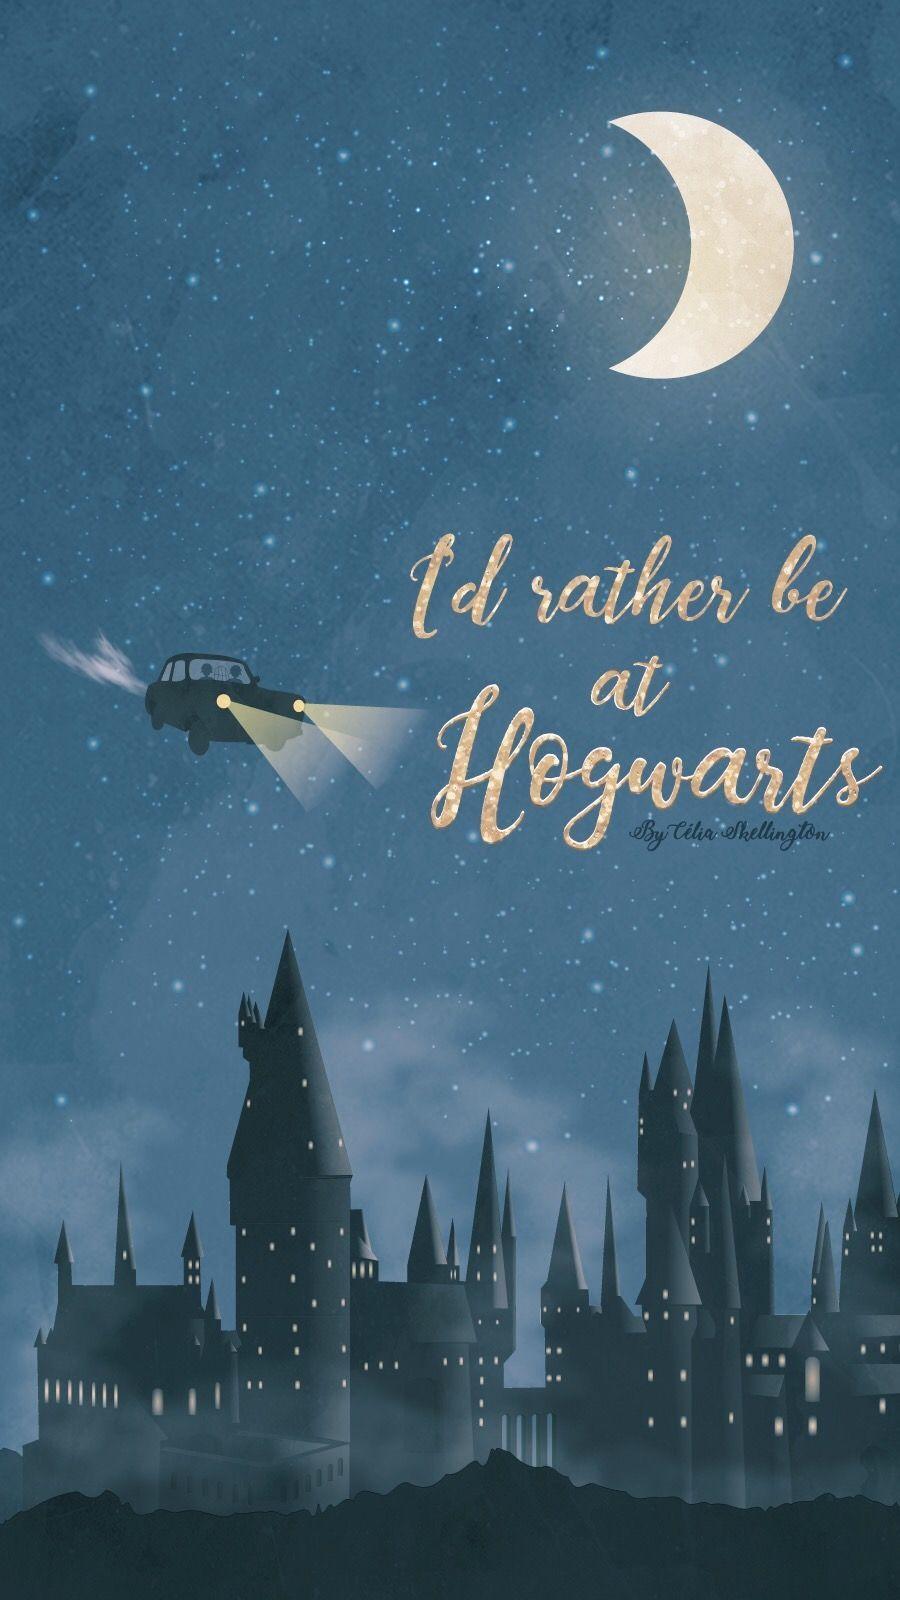 Harry Potter Wallpaper / Hogwarts. harry potter. Harry Potter